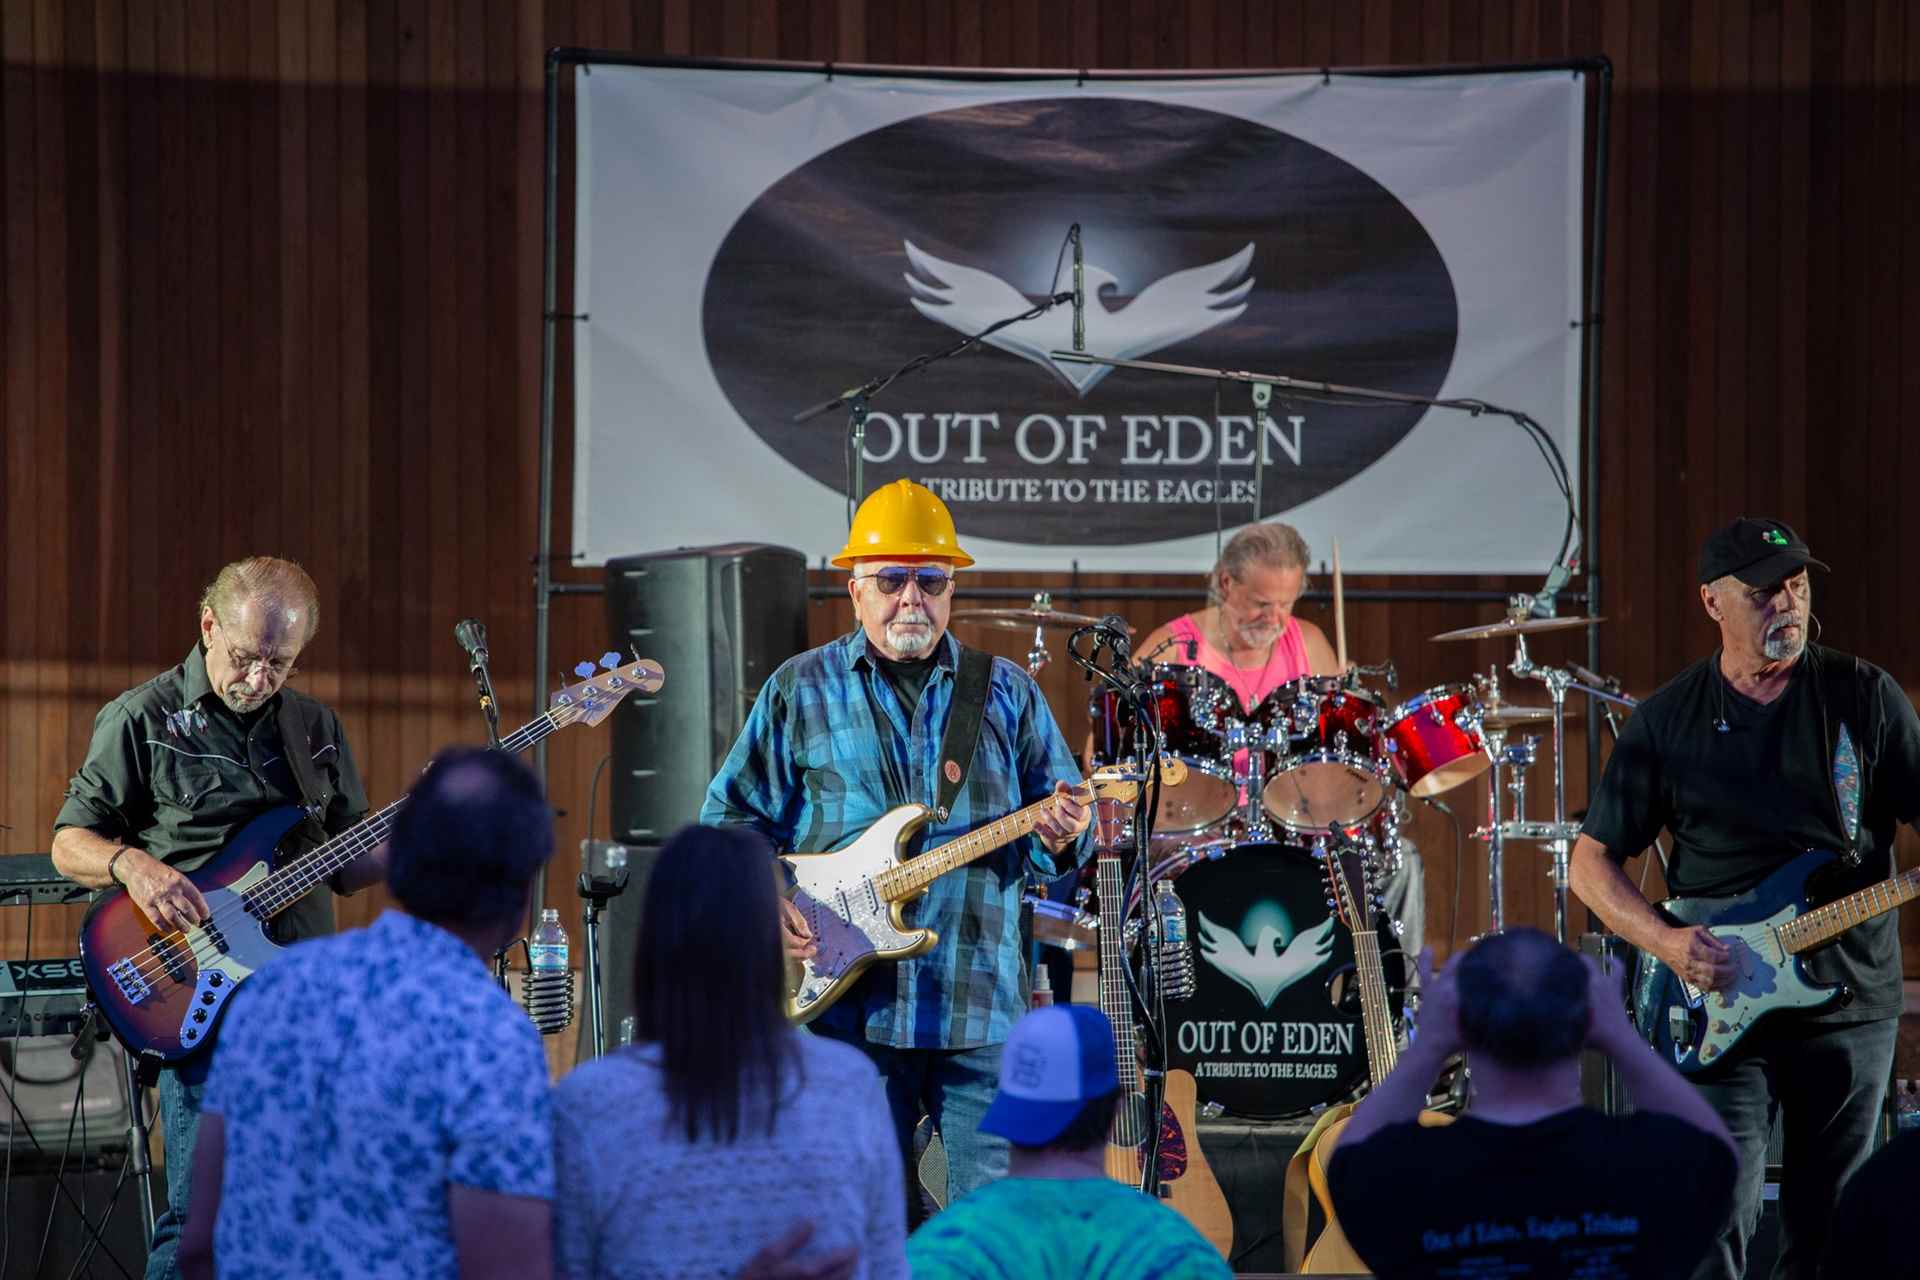 Out of Eden - Ohio's Premier Eagles Tribute